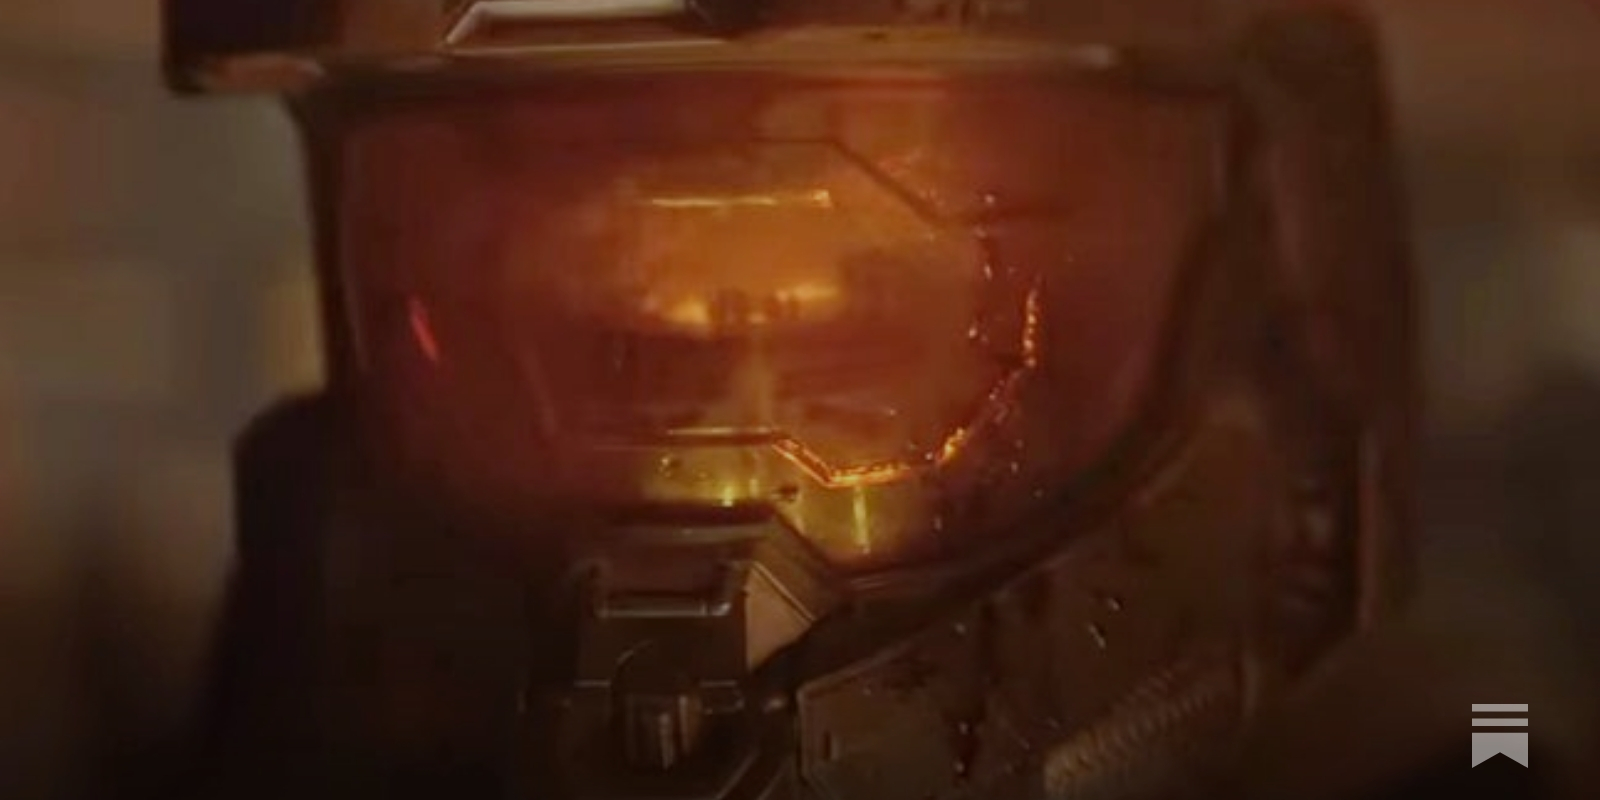 Halo Season 2 'CCXP' Teaser 